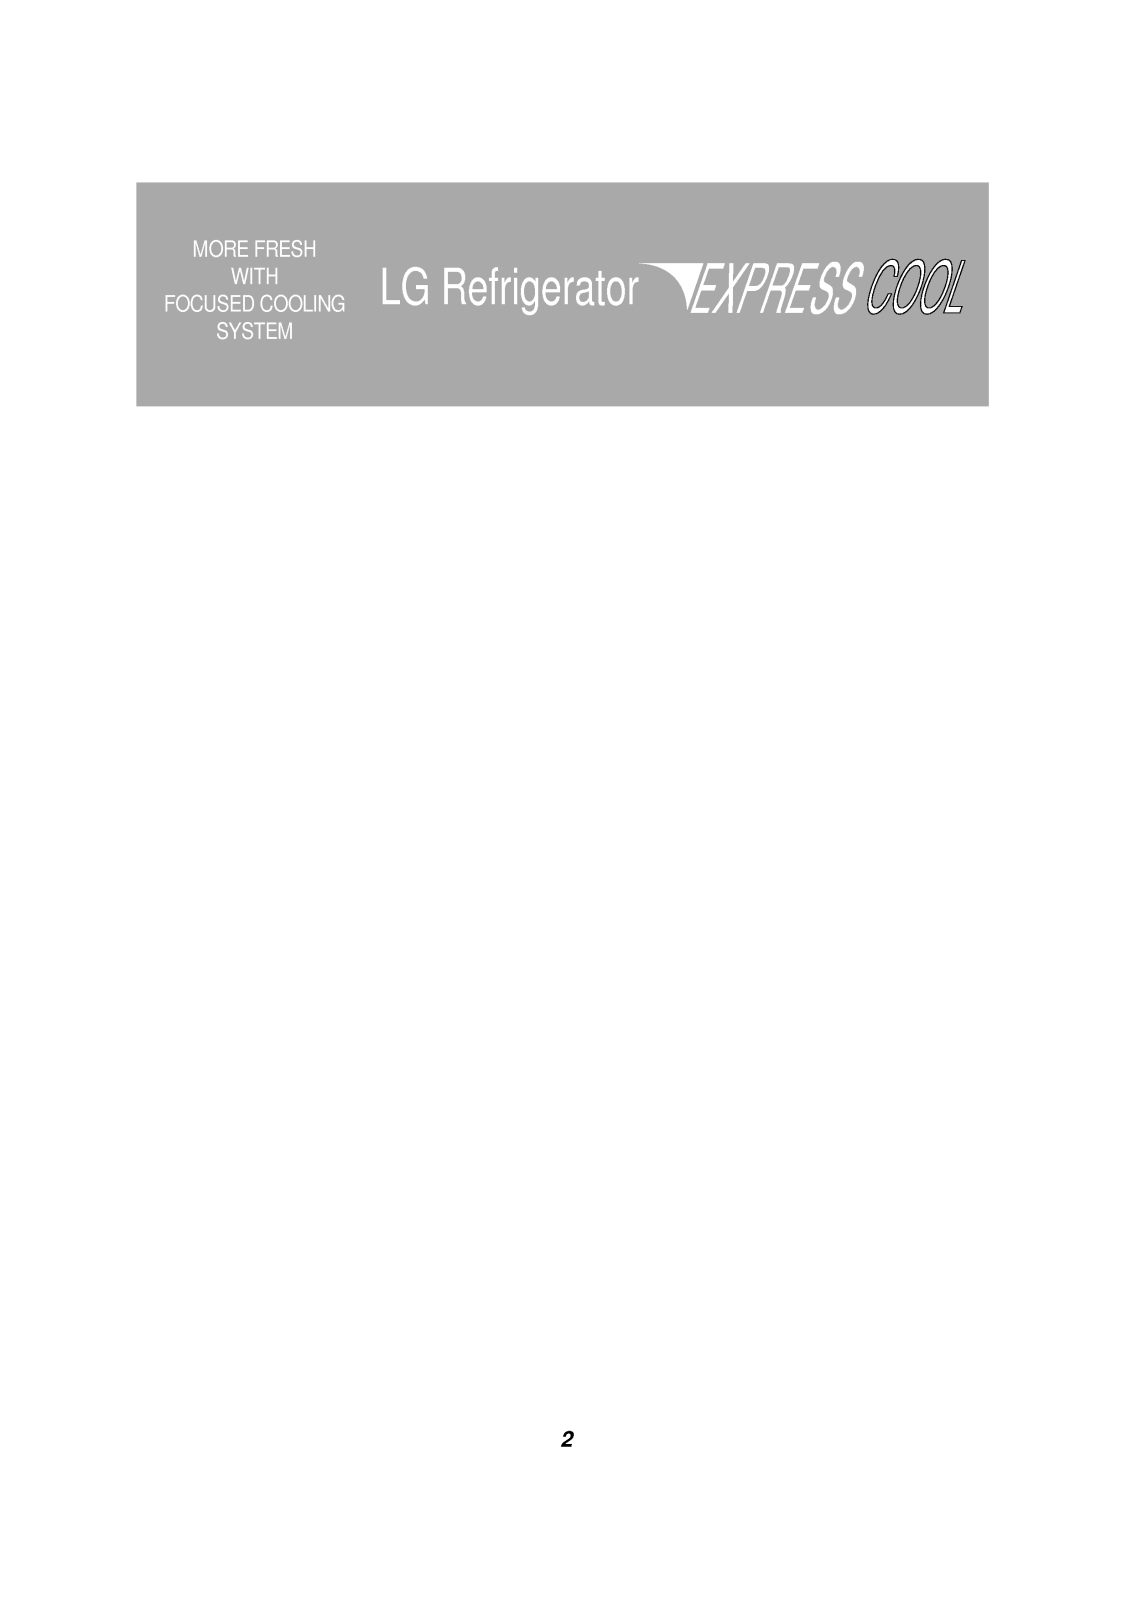 LG BK 9702 NF, GR-642BEQF, 8188 NF, 8190 NF, LR-762DEPF Manual